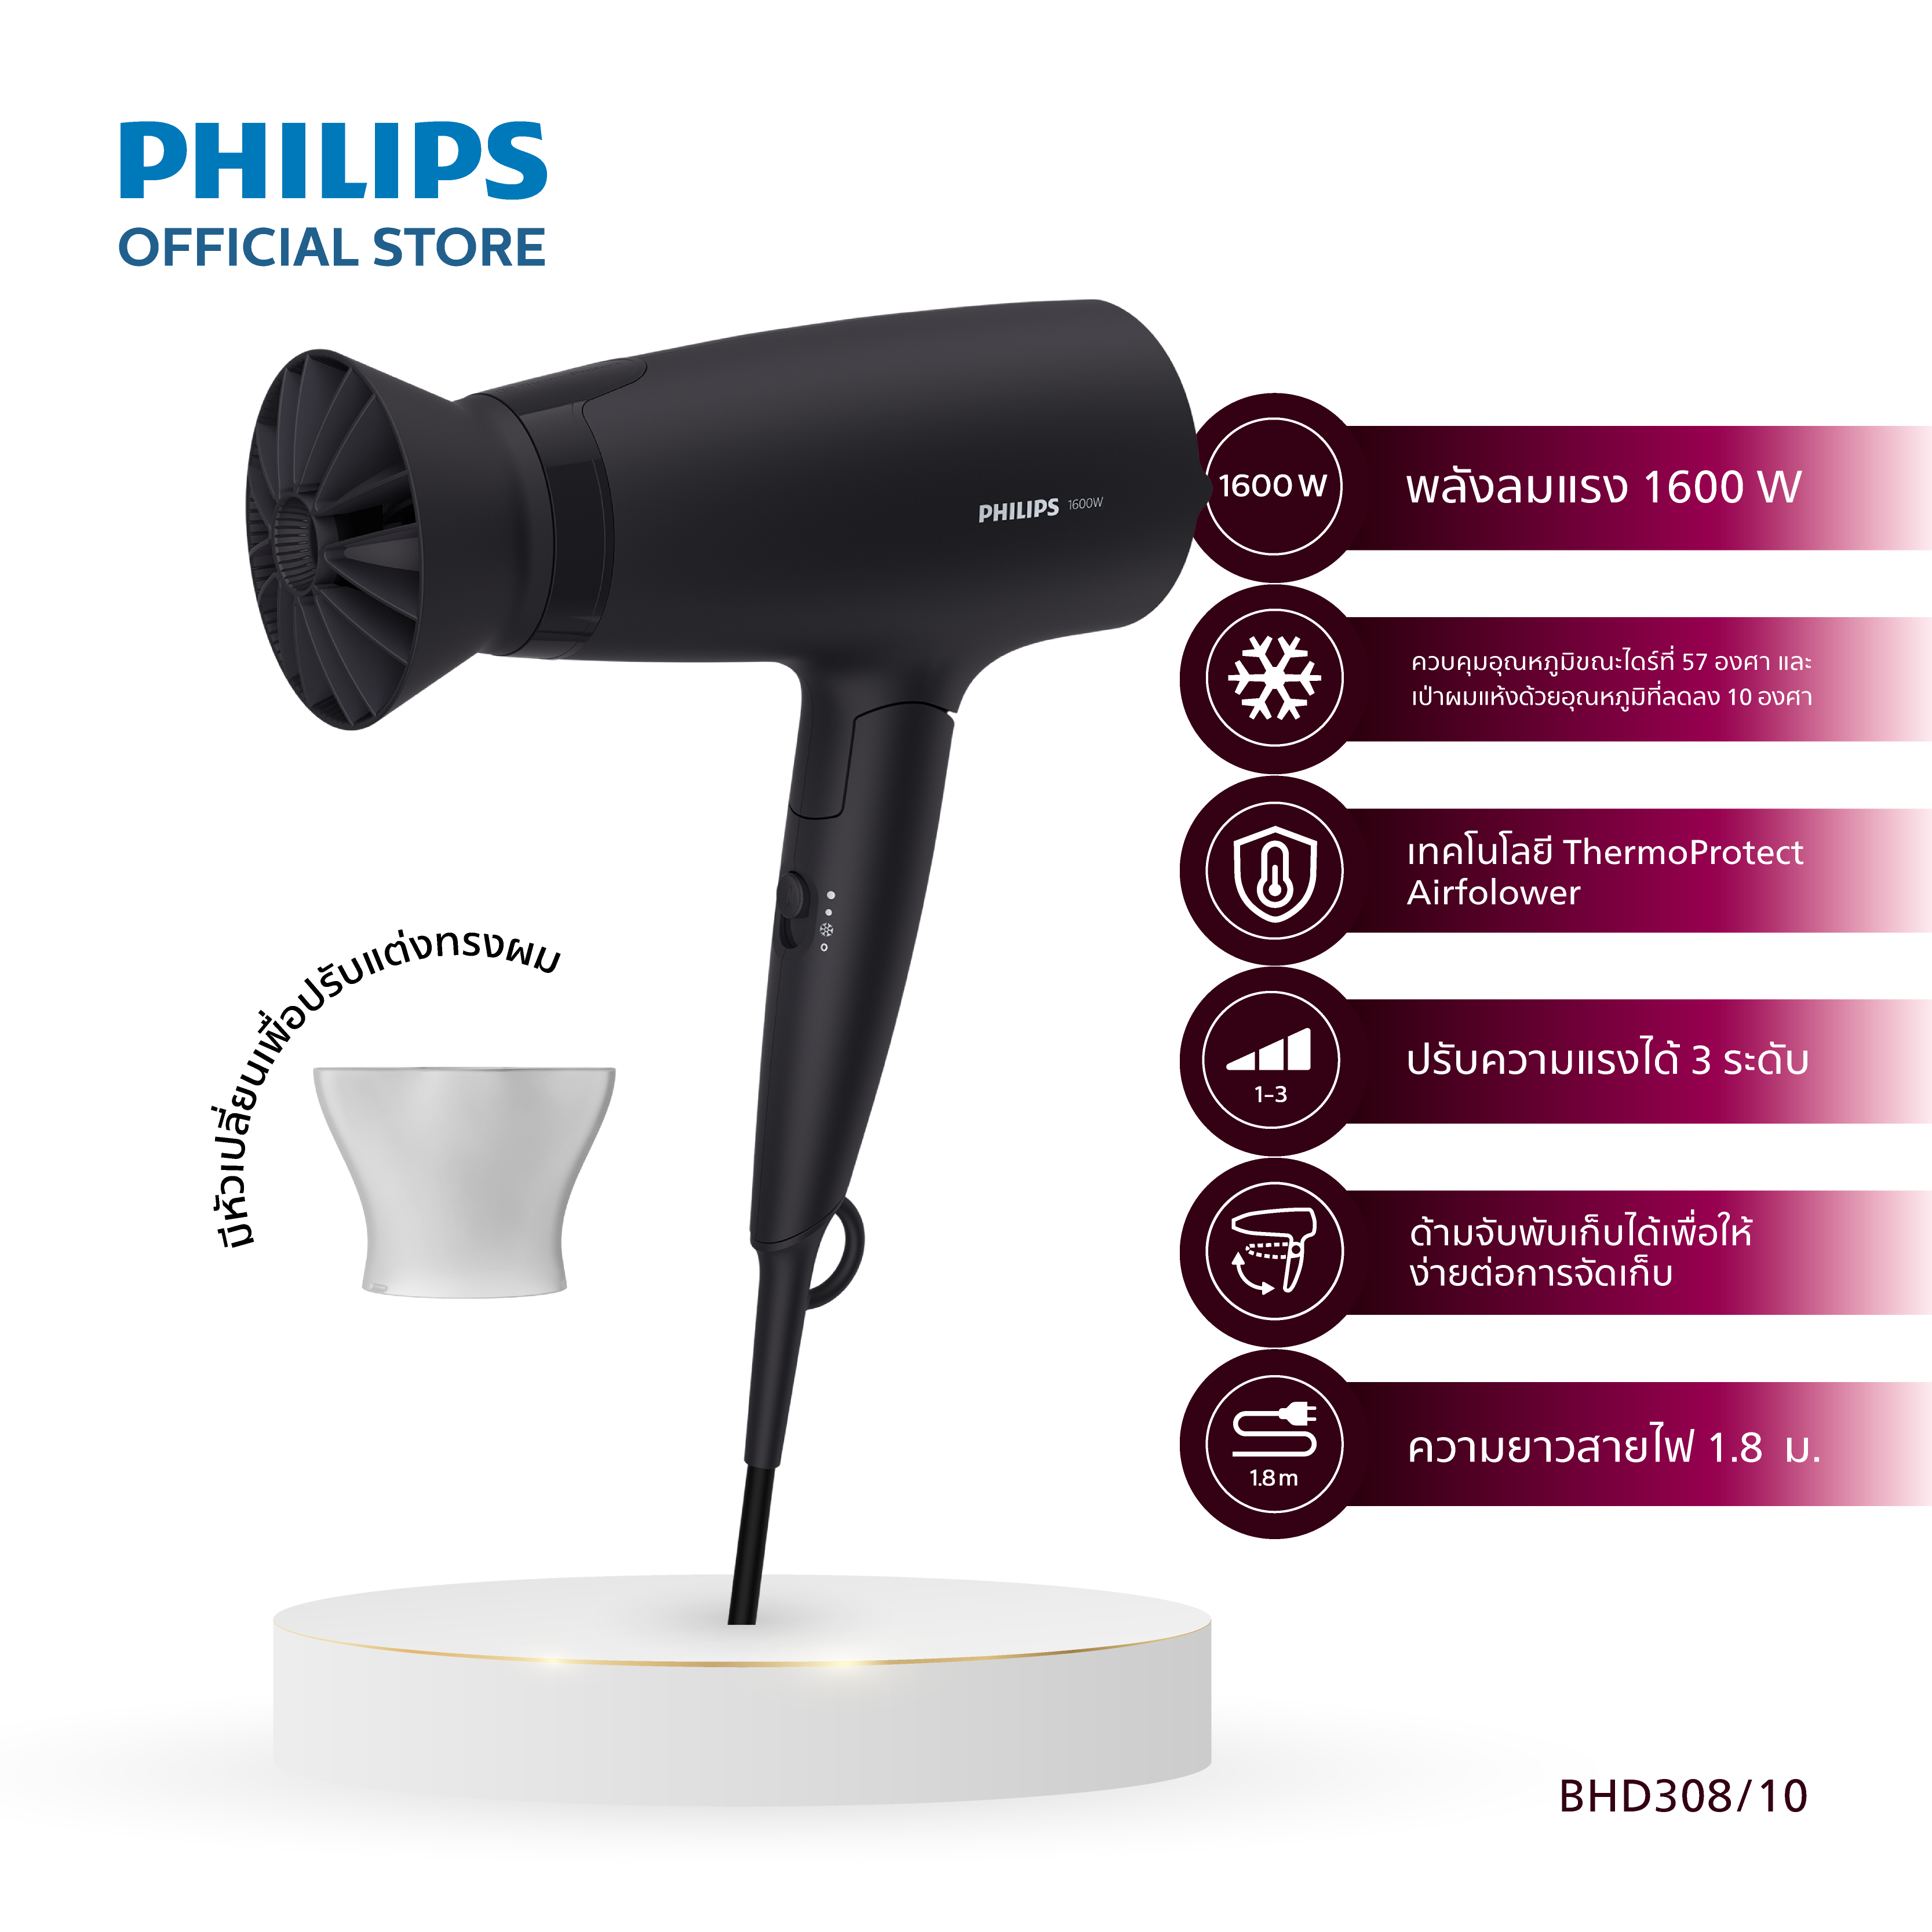 Philips Hair Dryer ไดร์เป่าผม รุ่น BHD308/10 เป่าผมแห้งเร็ว อย่างอ่อนโยน ด้วยอุณหภูมิที่ลดลง